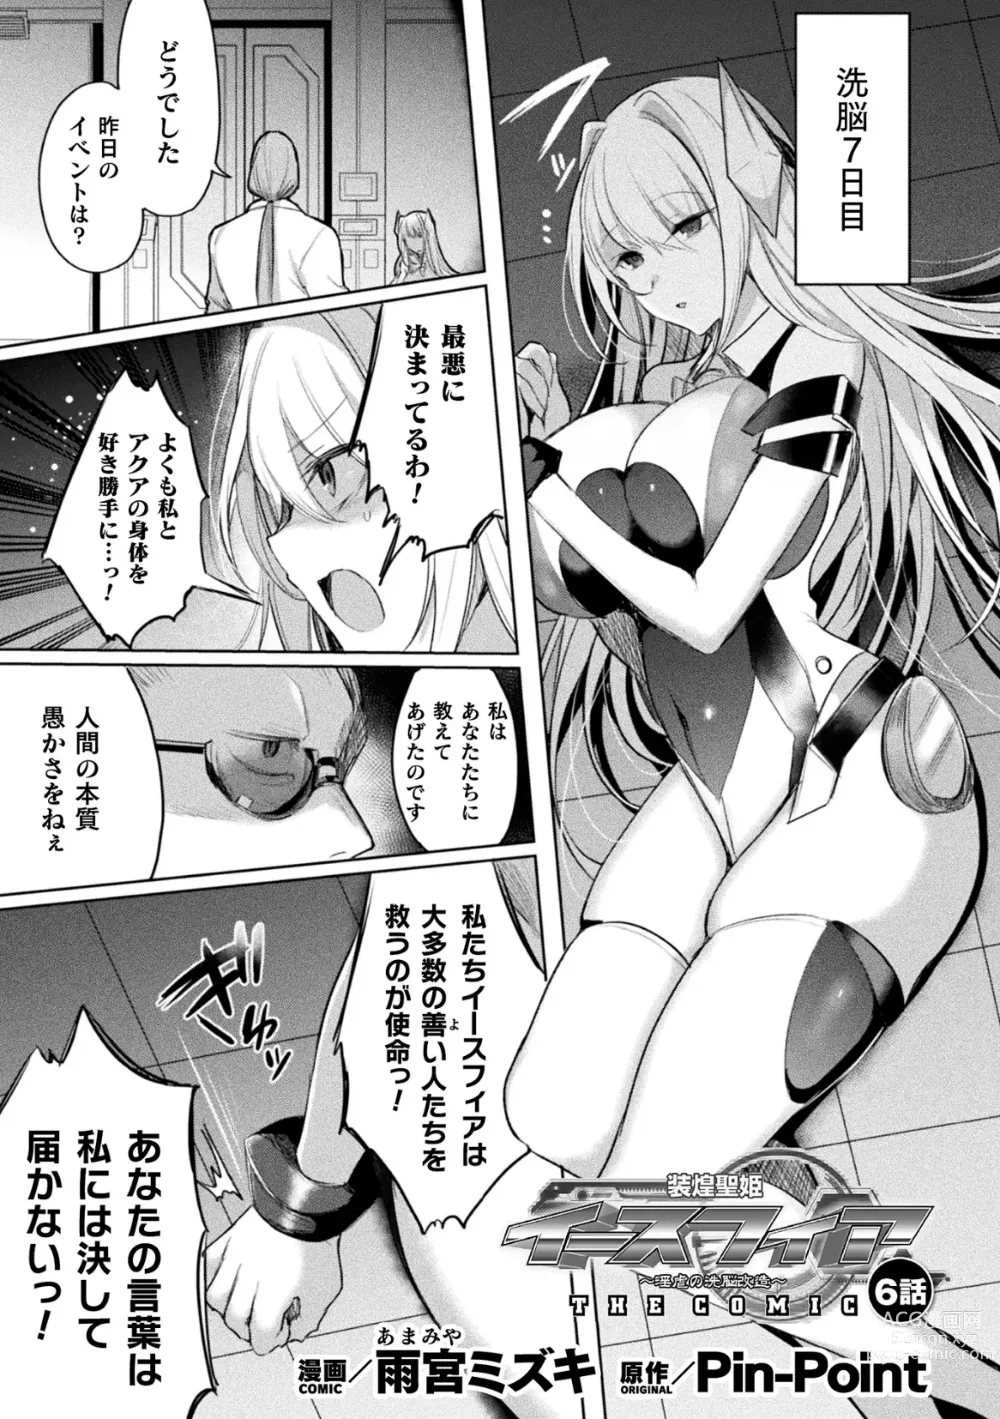 Page 5 of manga Kukkoro Heroines Vol. 35